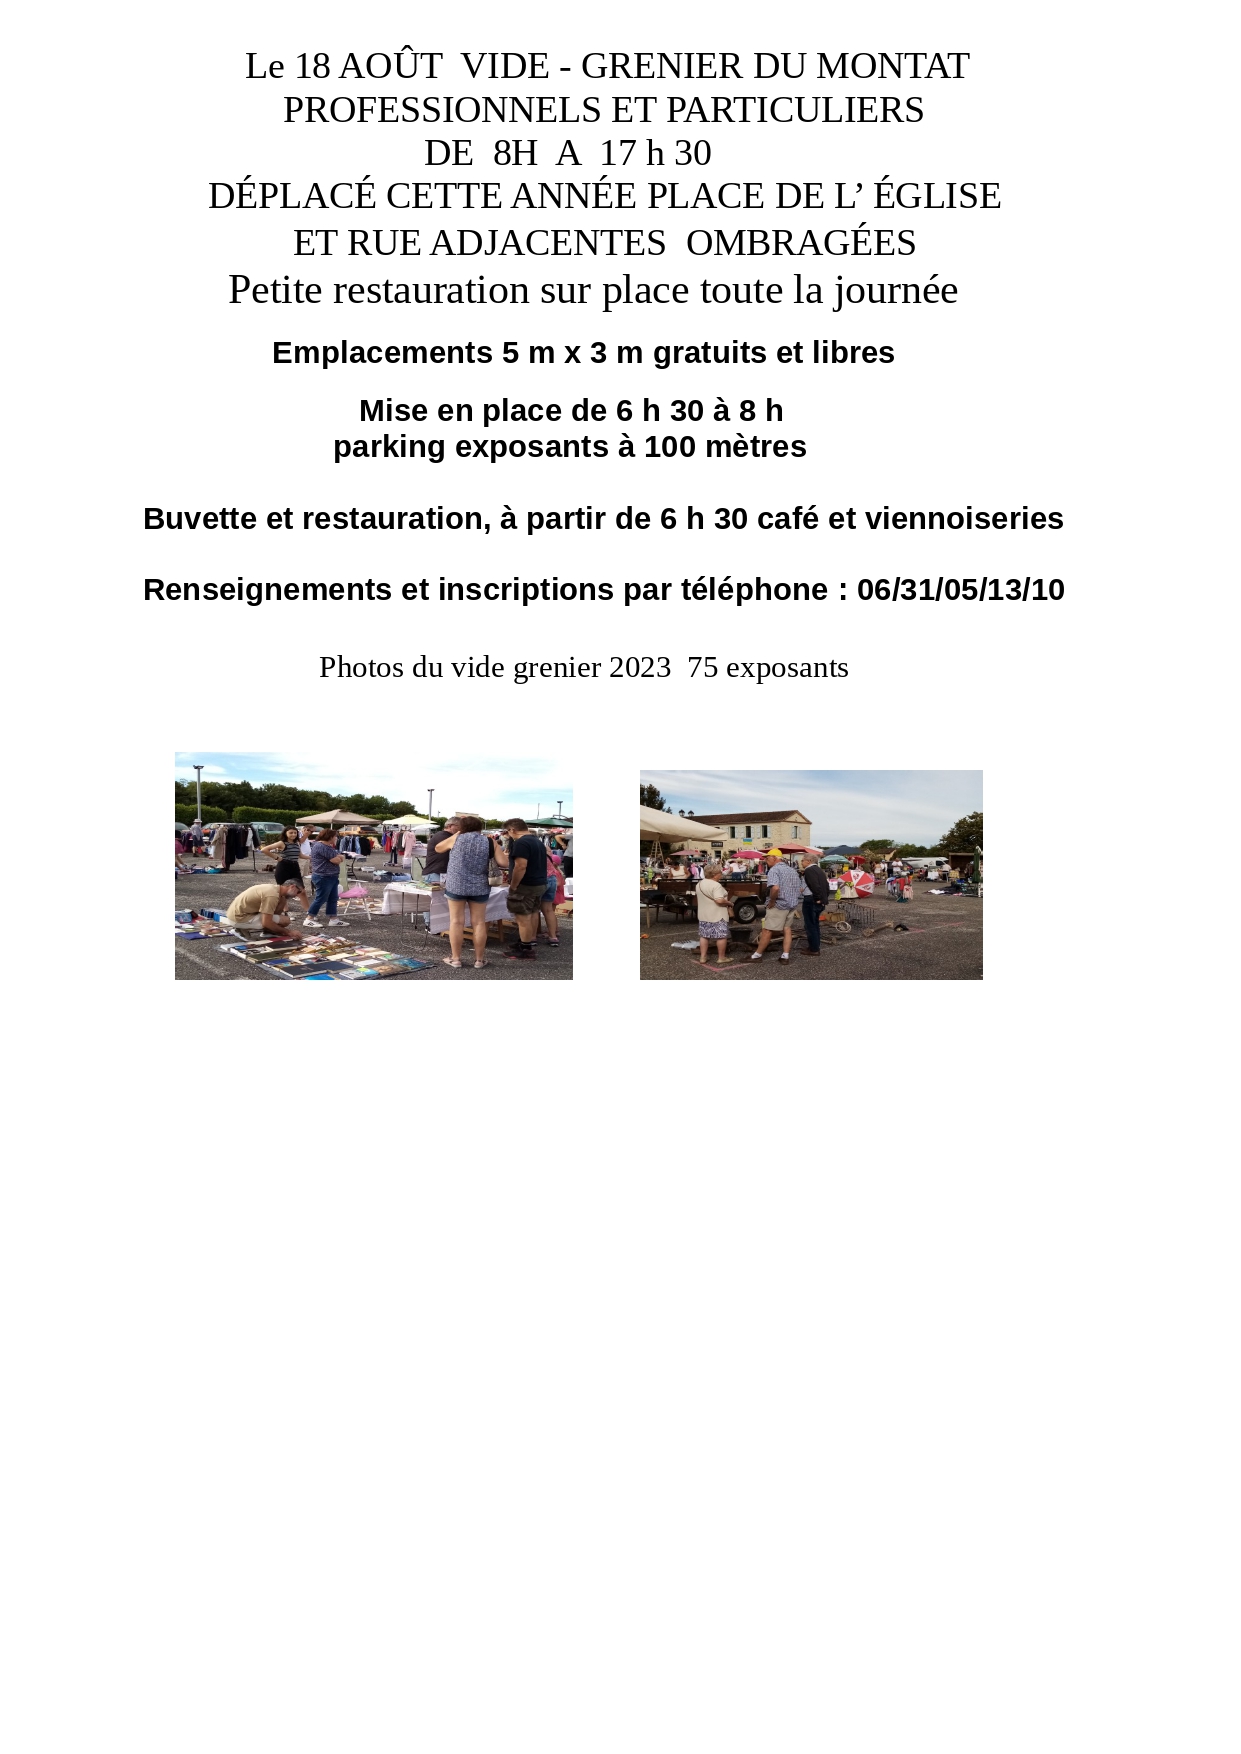 Figeac : Vide-greniers au Montat